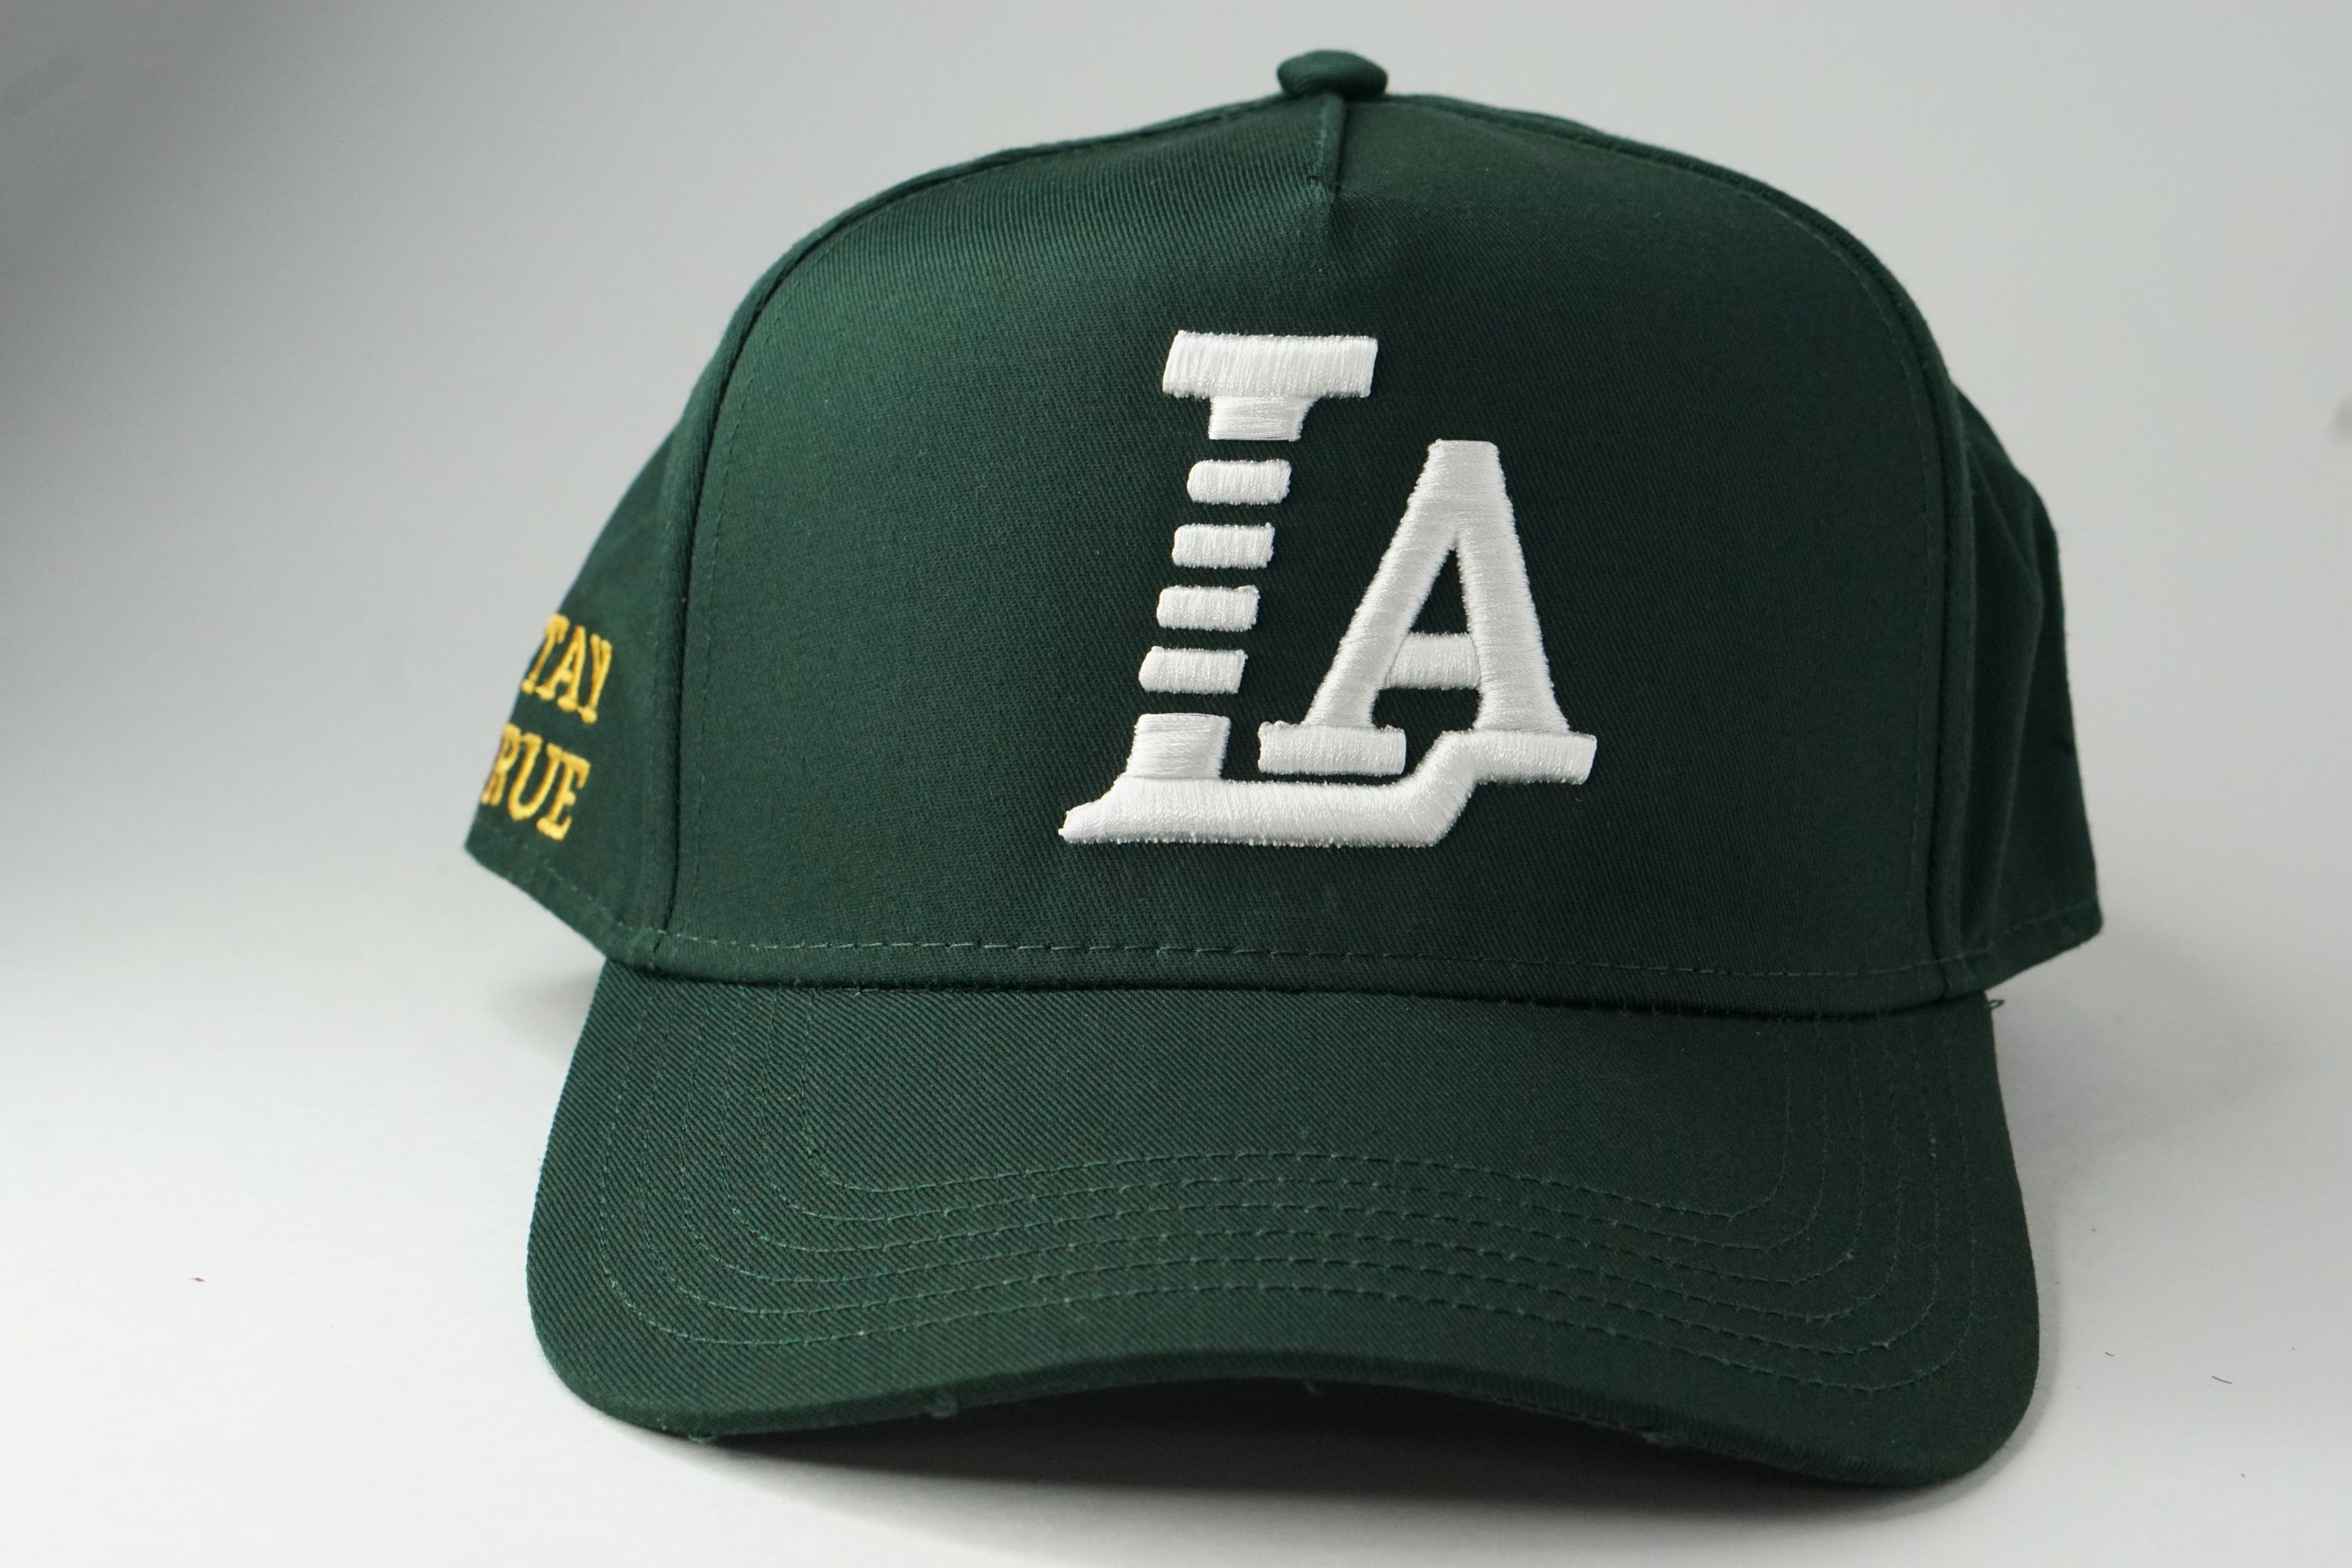 Oakland Green LA hat